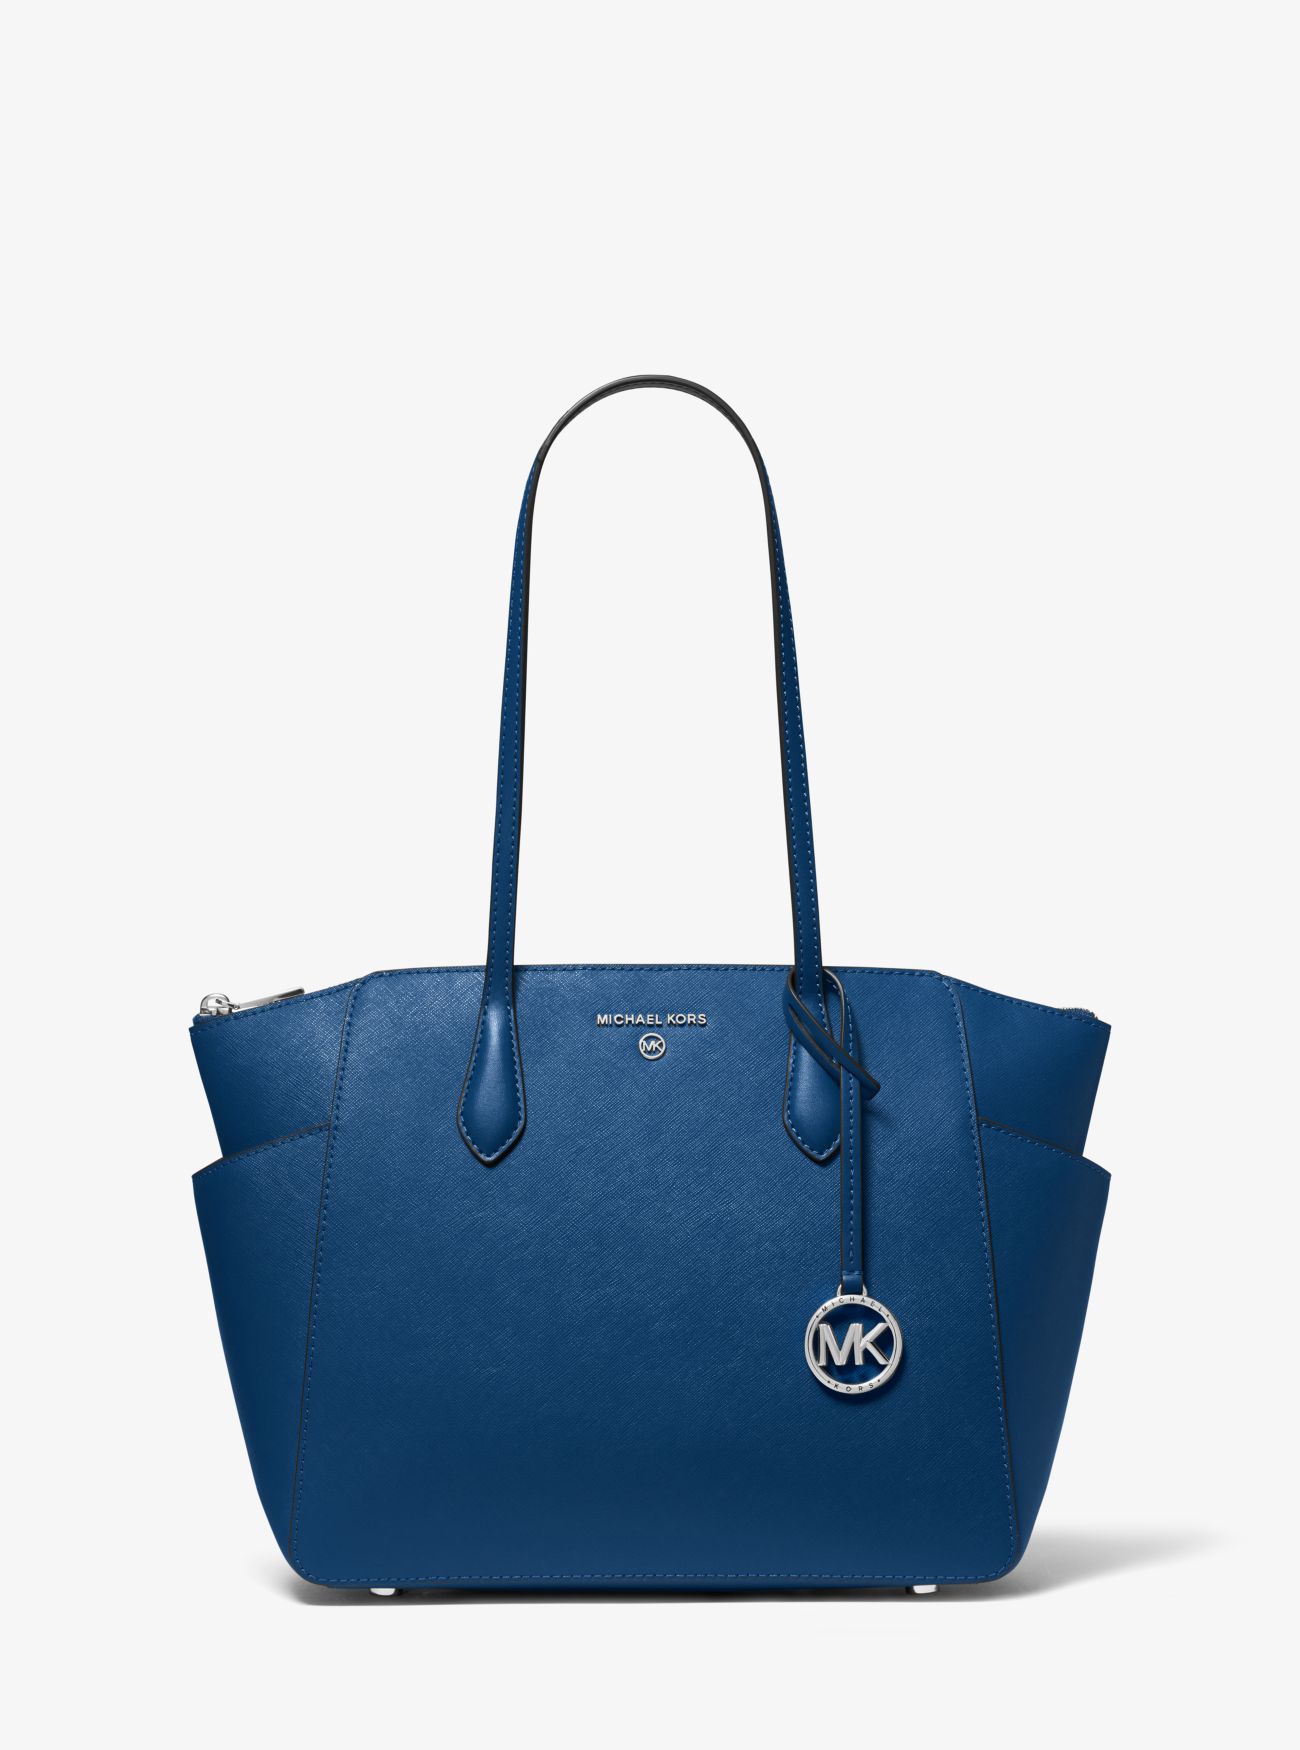 MK Marilyn Medium Saffiano Leather Tote Bag - River Blue - Michael Kors